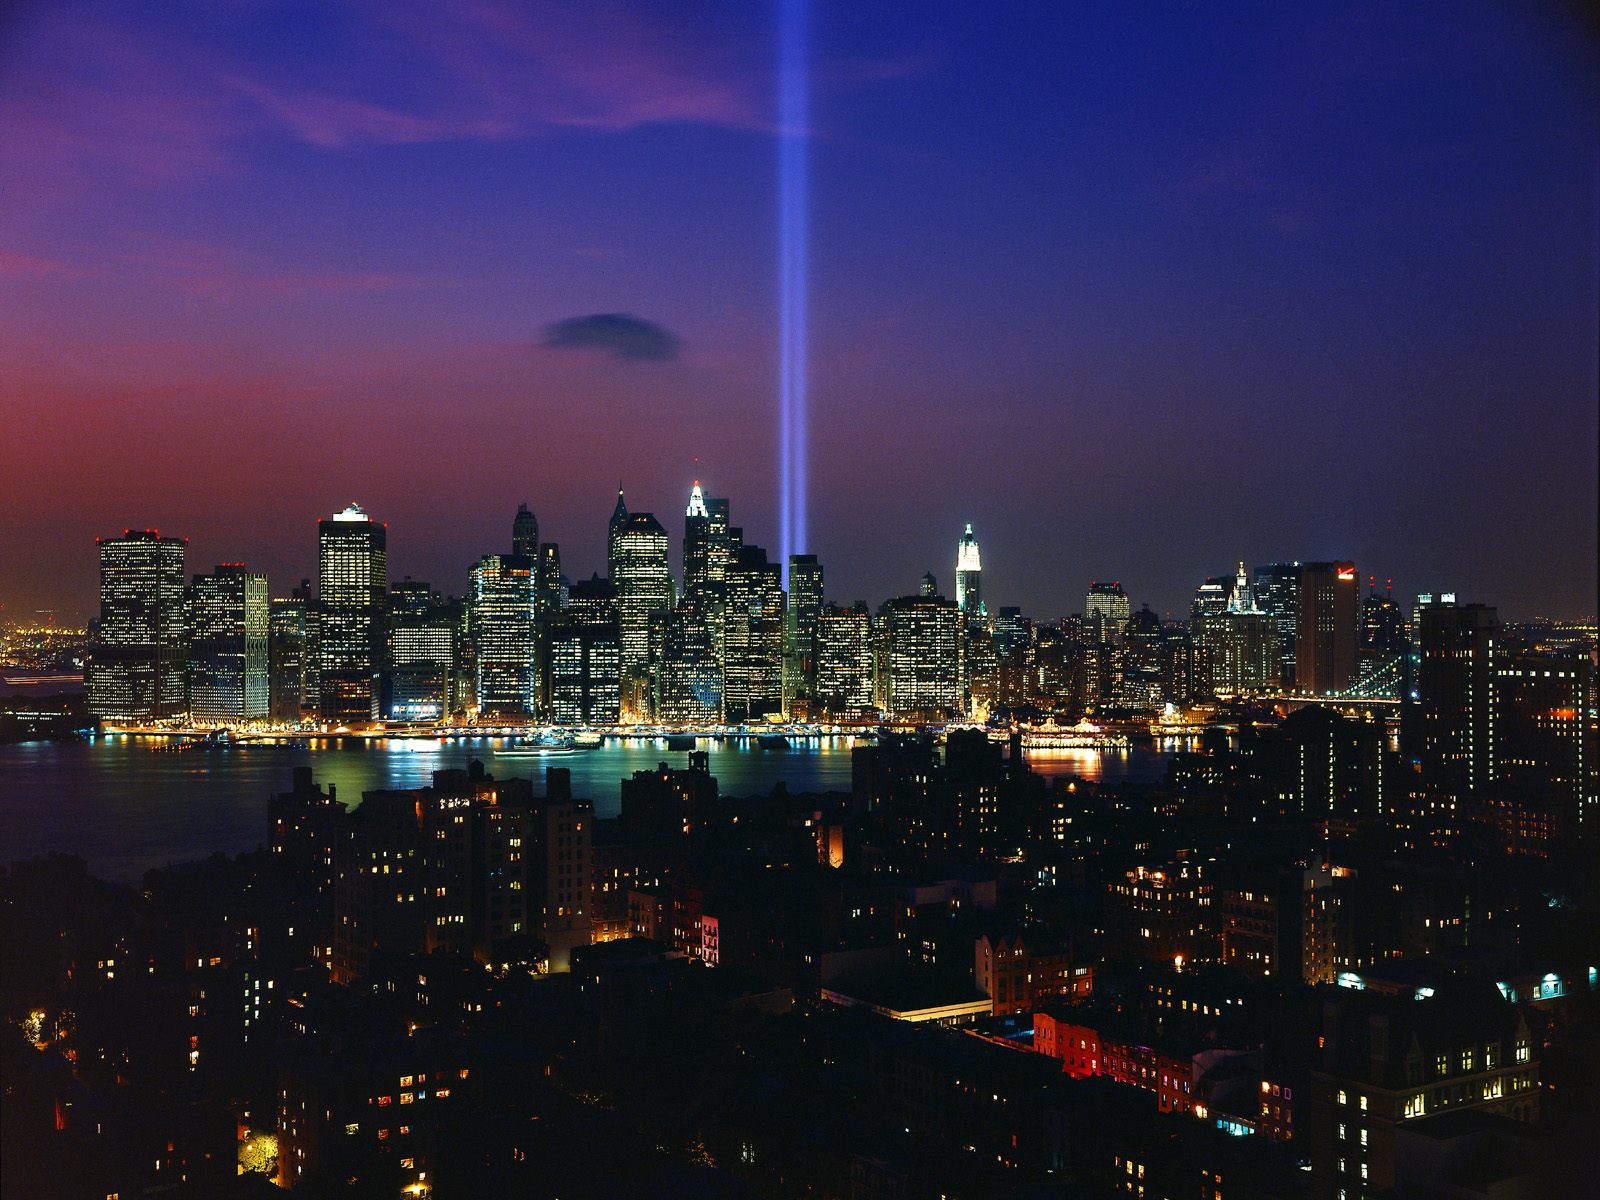 Tribute in Light September 11th Memorial Display New York City